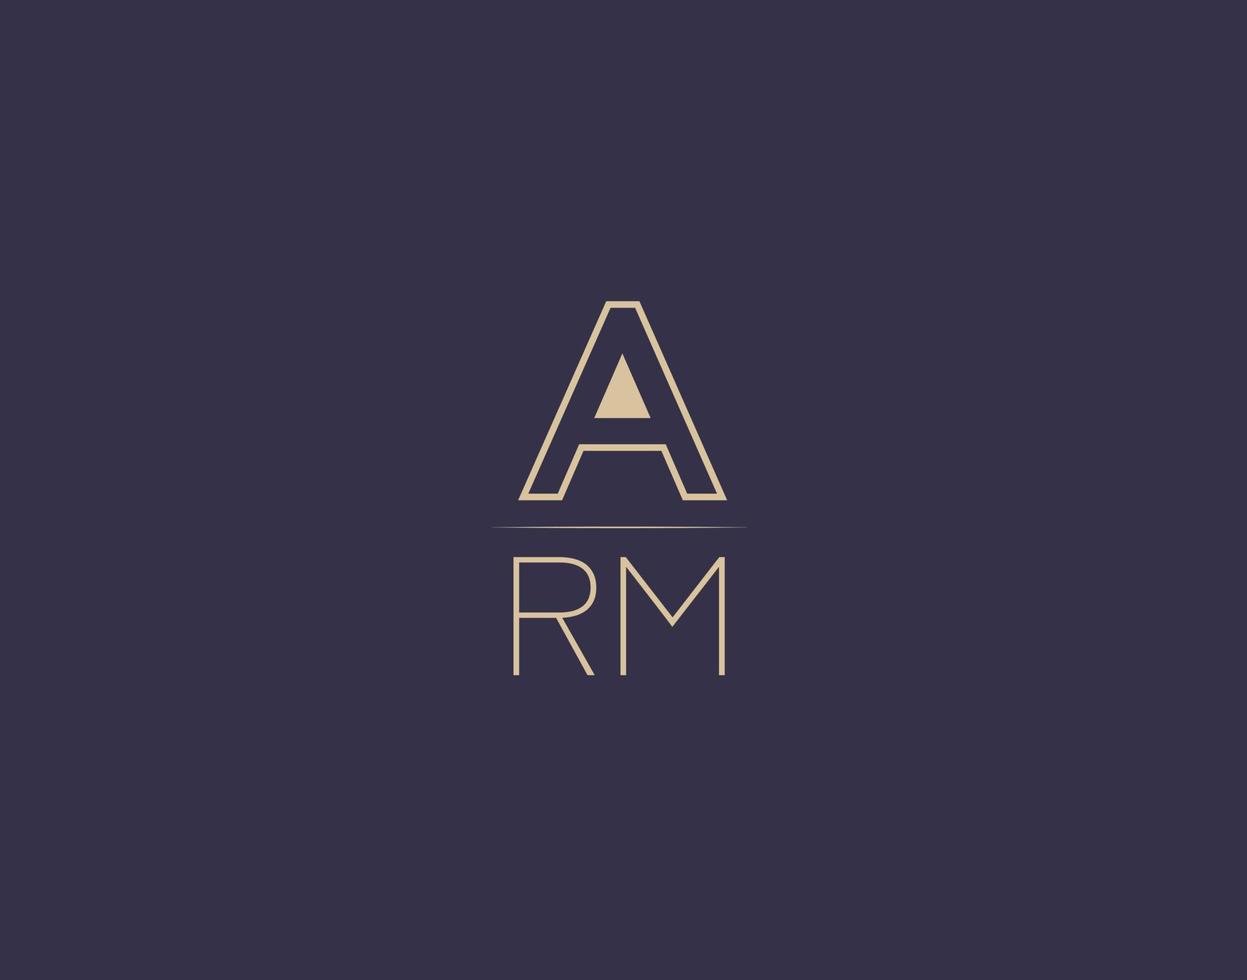 ARM letter logo design modern minimalist vector images